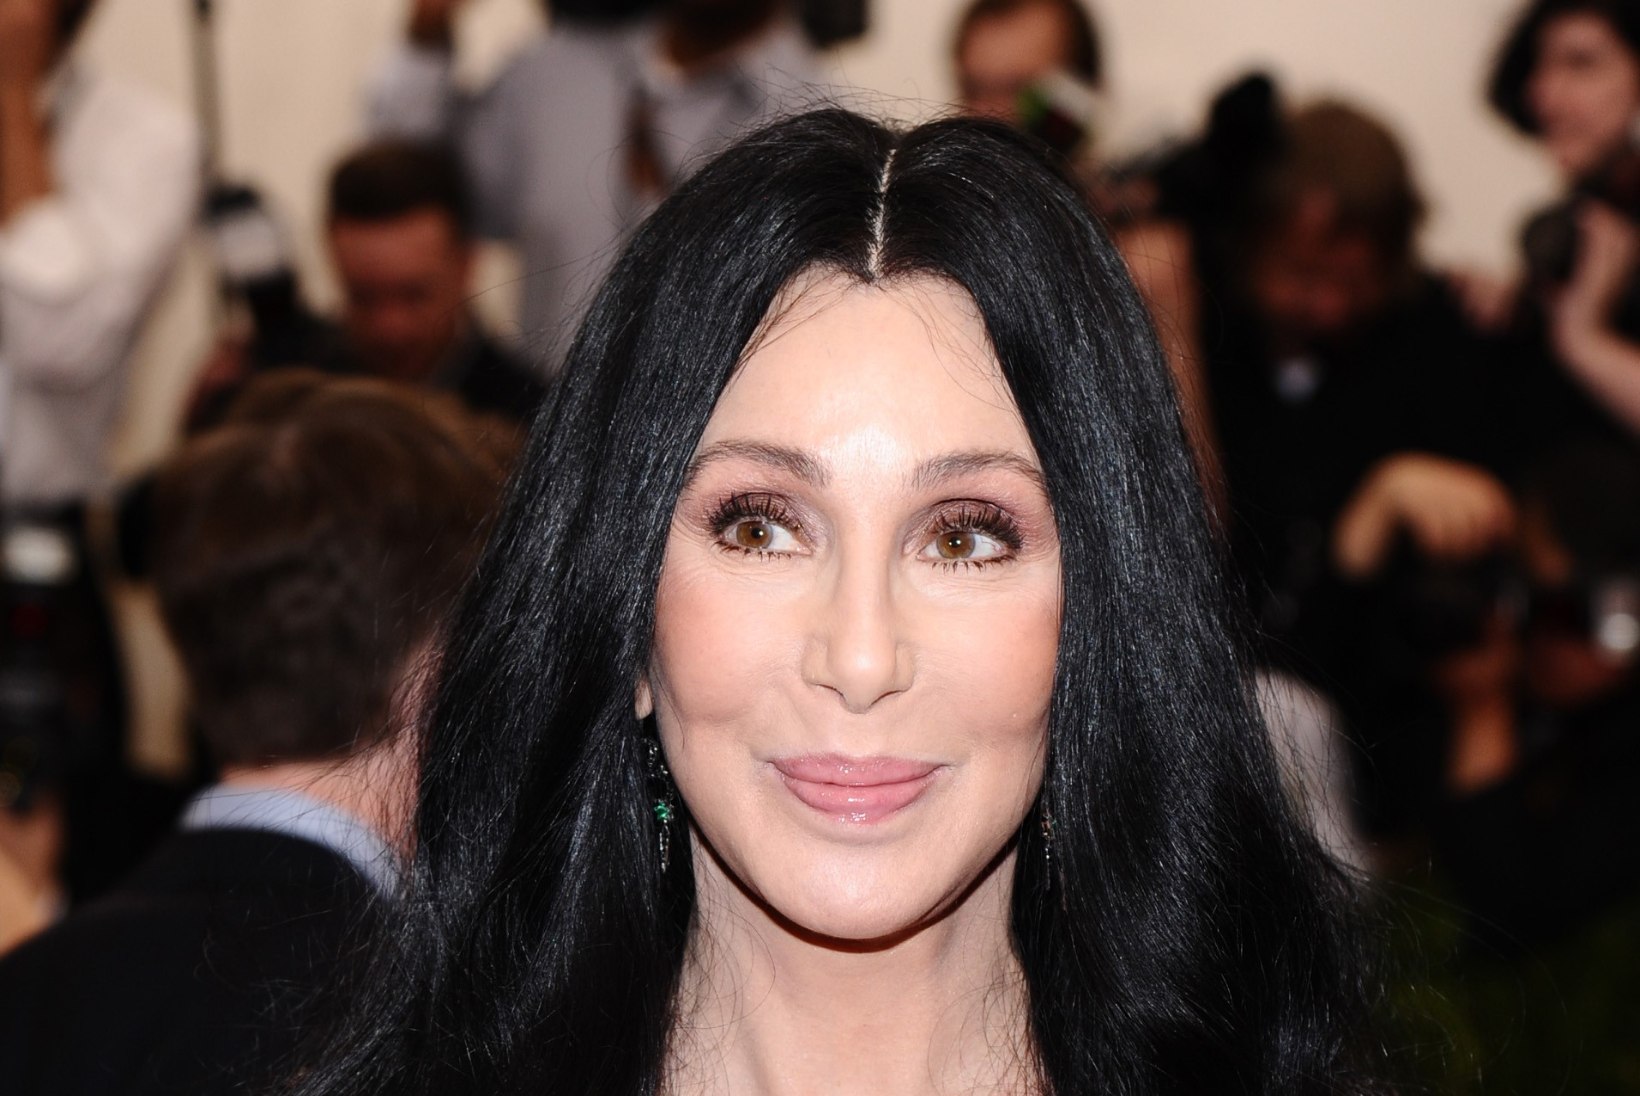 BOHEEMLASLIK: 69-aastane paljasjalgne Cher